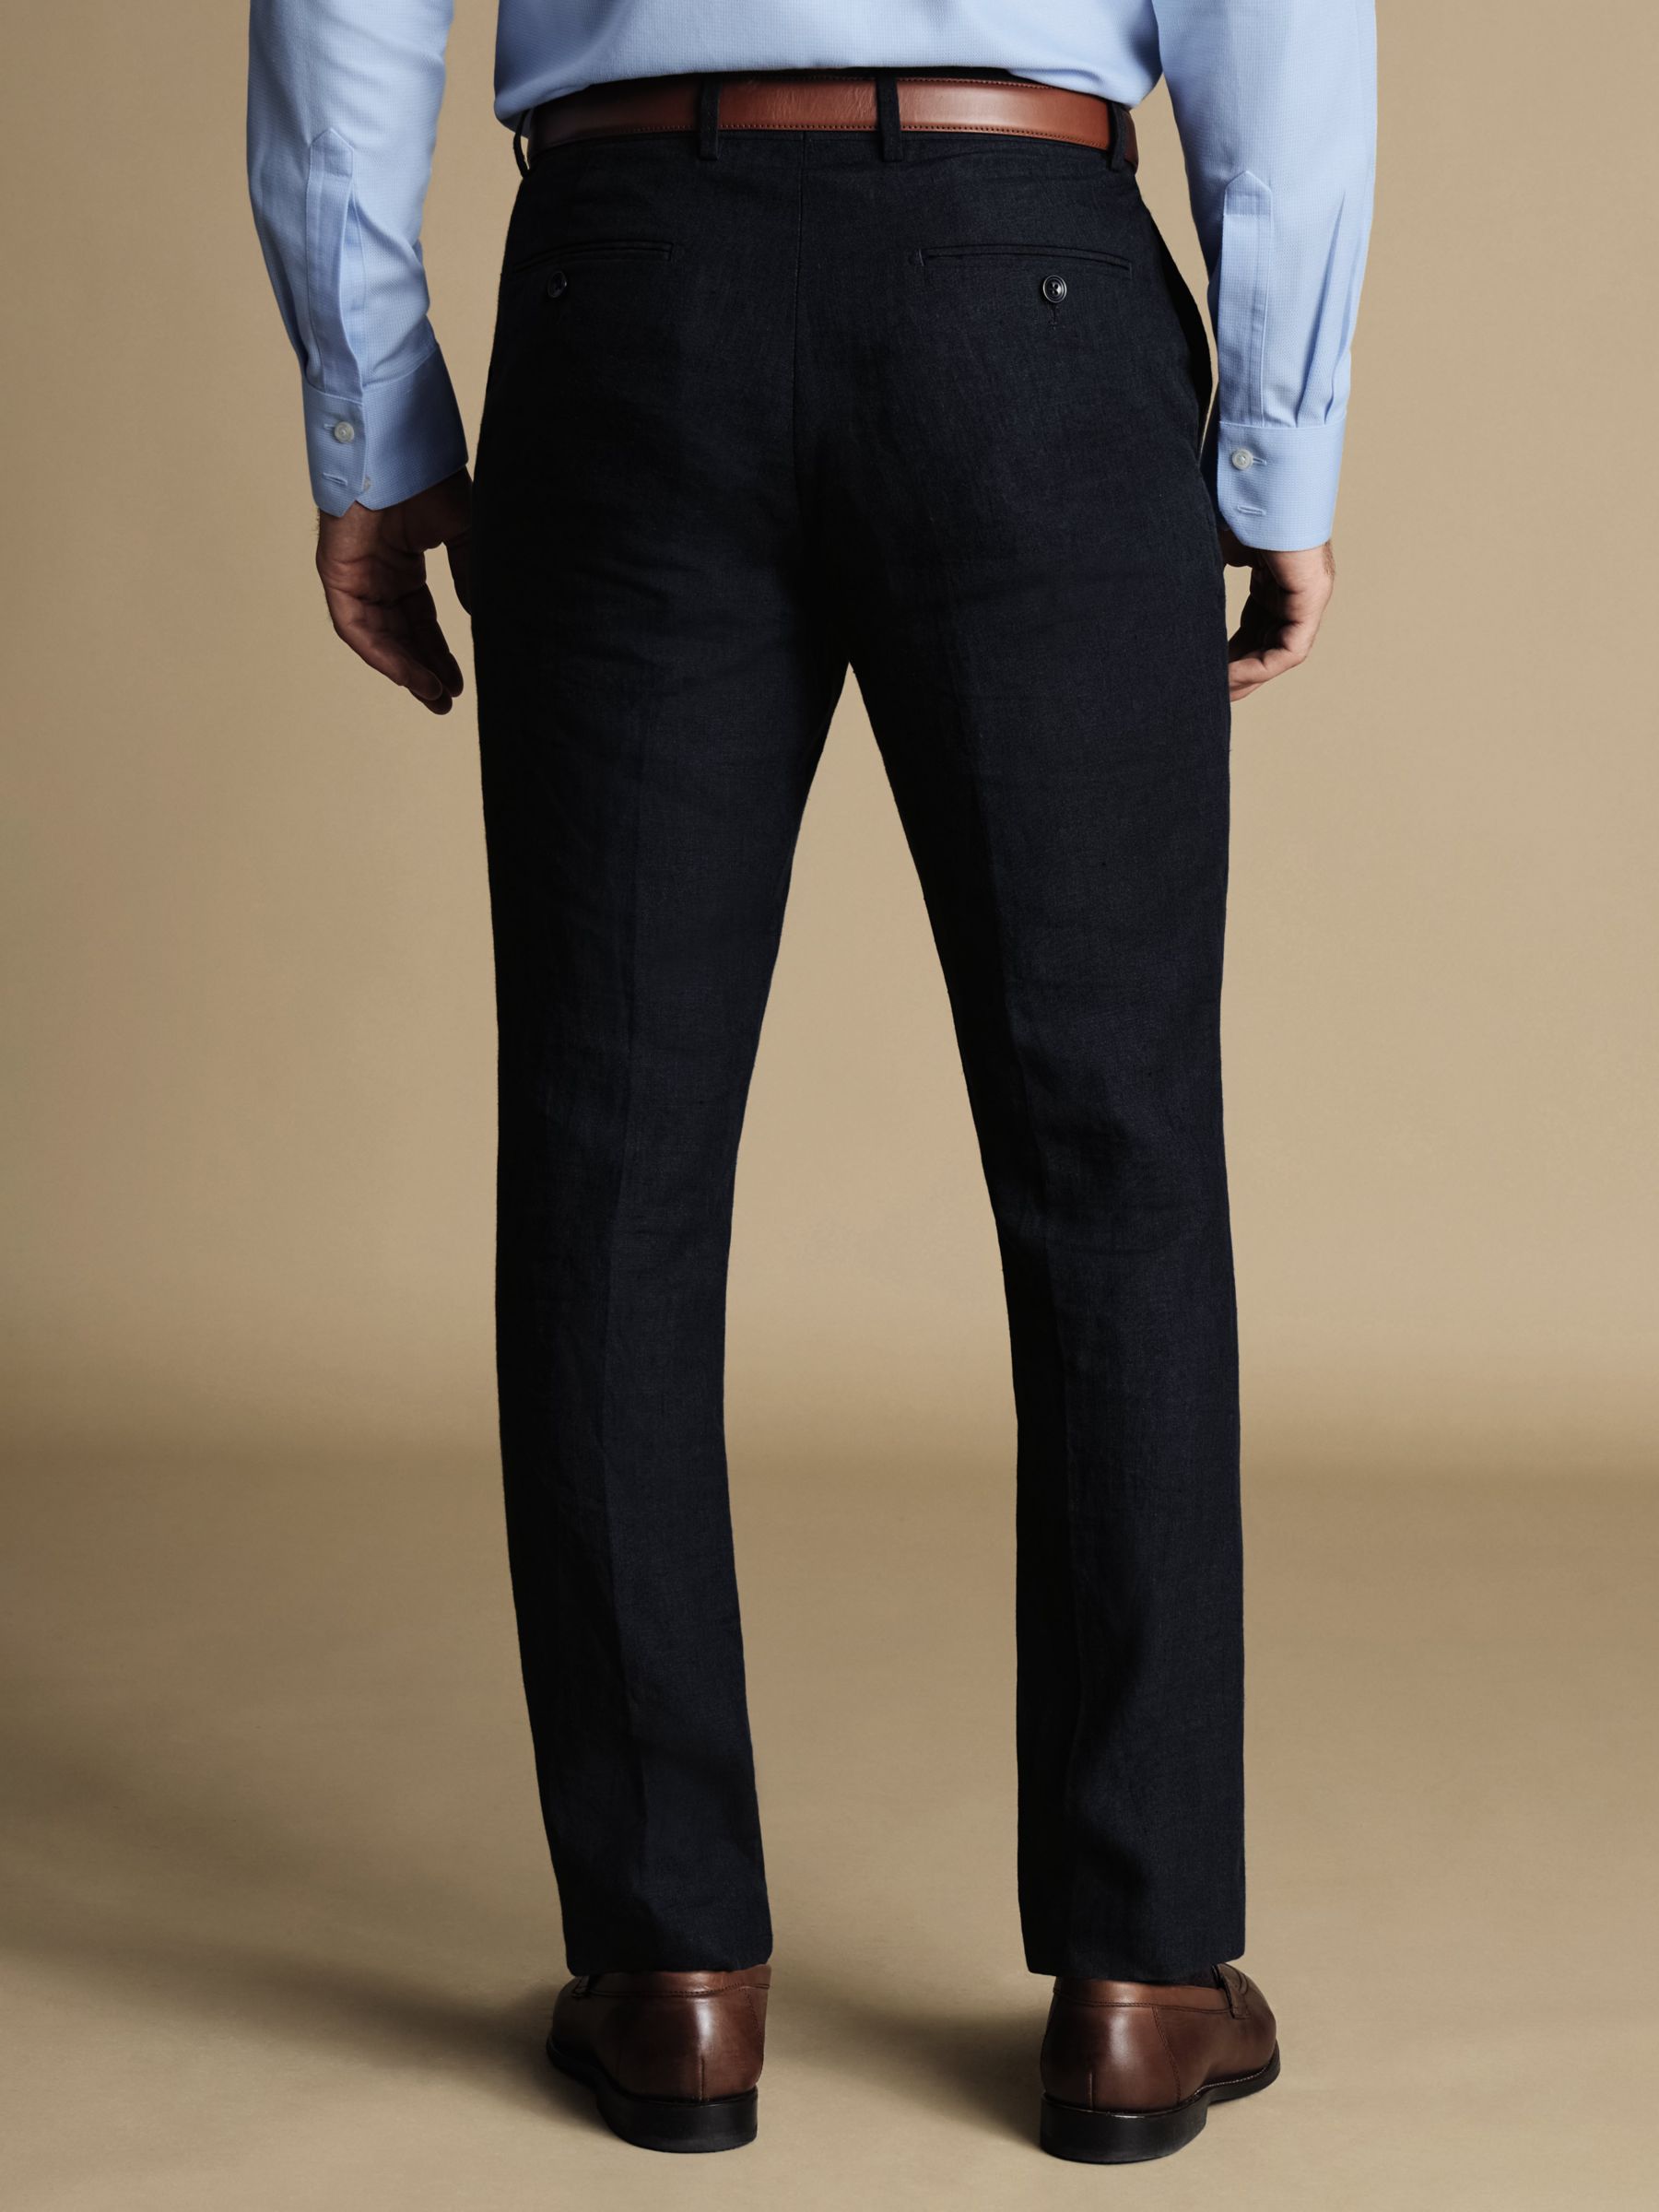 Buy Charles Tyrwhitt Slim Fit Linen Suit Trousers, Dark Navy Online at johnlewis.com